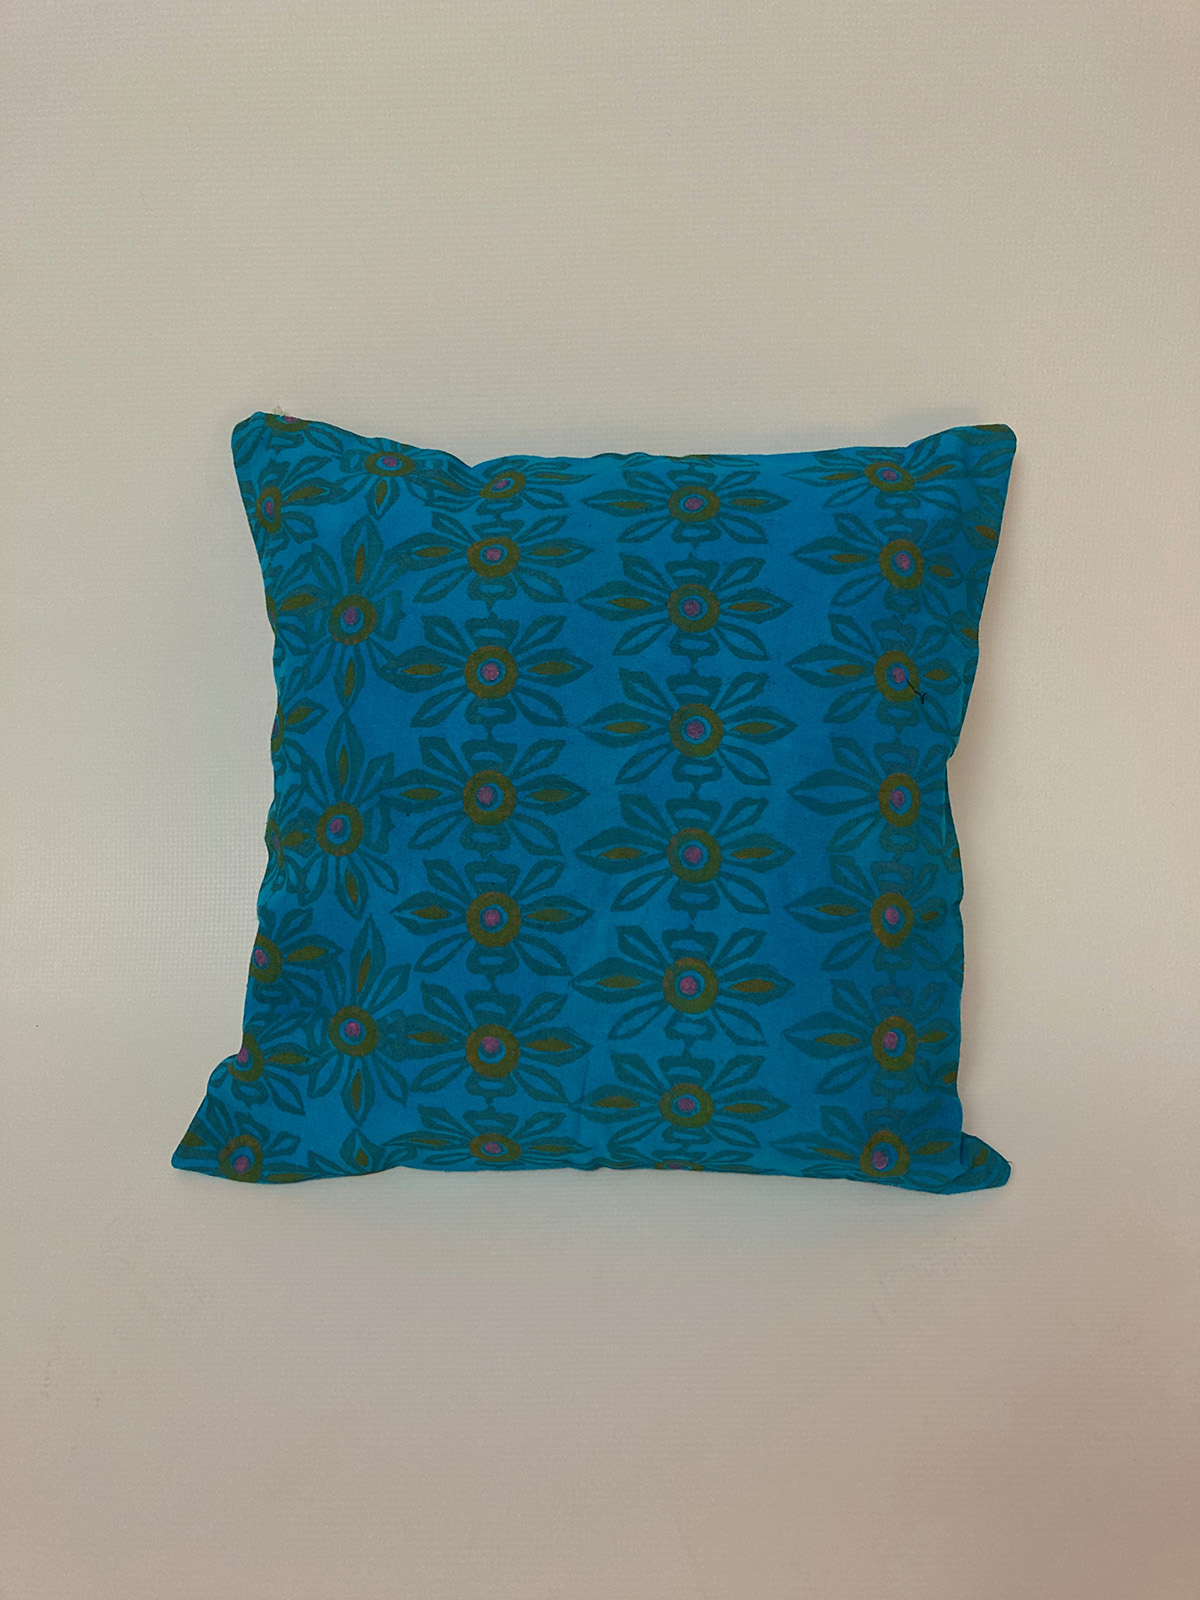 Cushion cover potato print blue and green